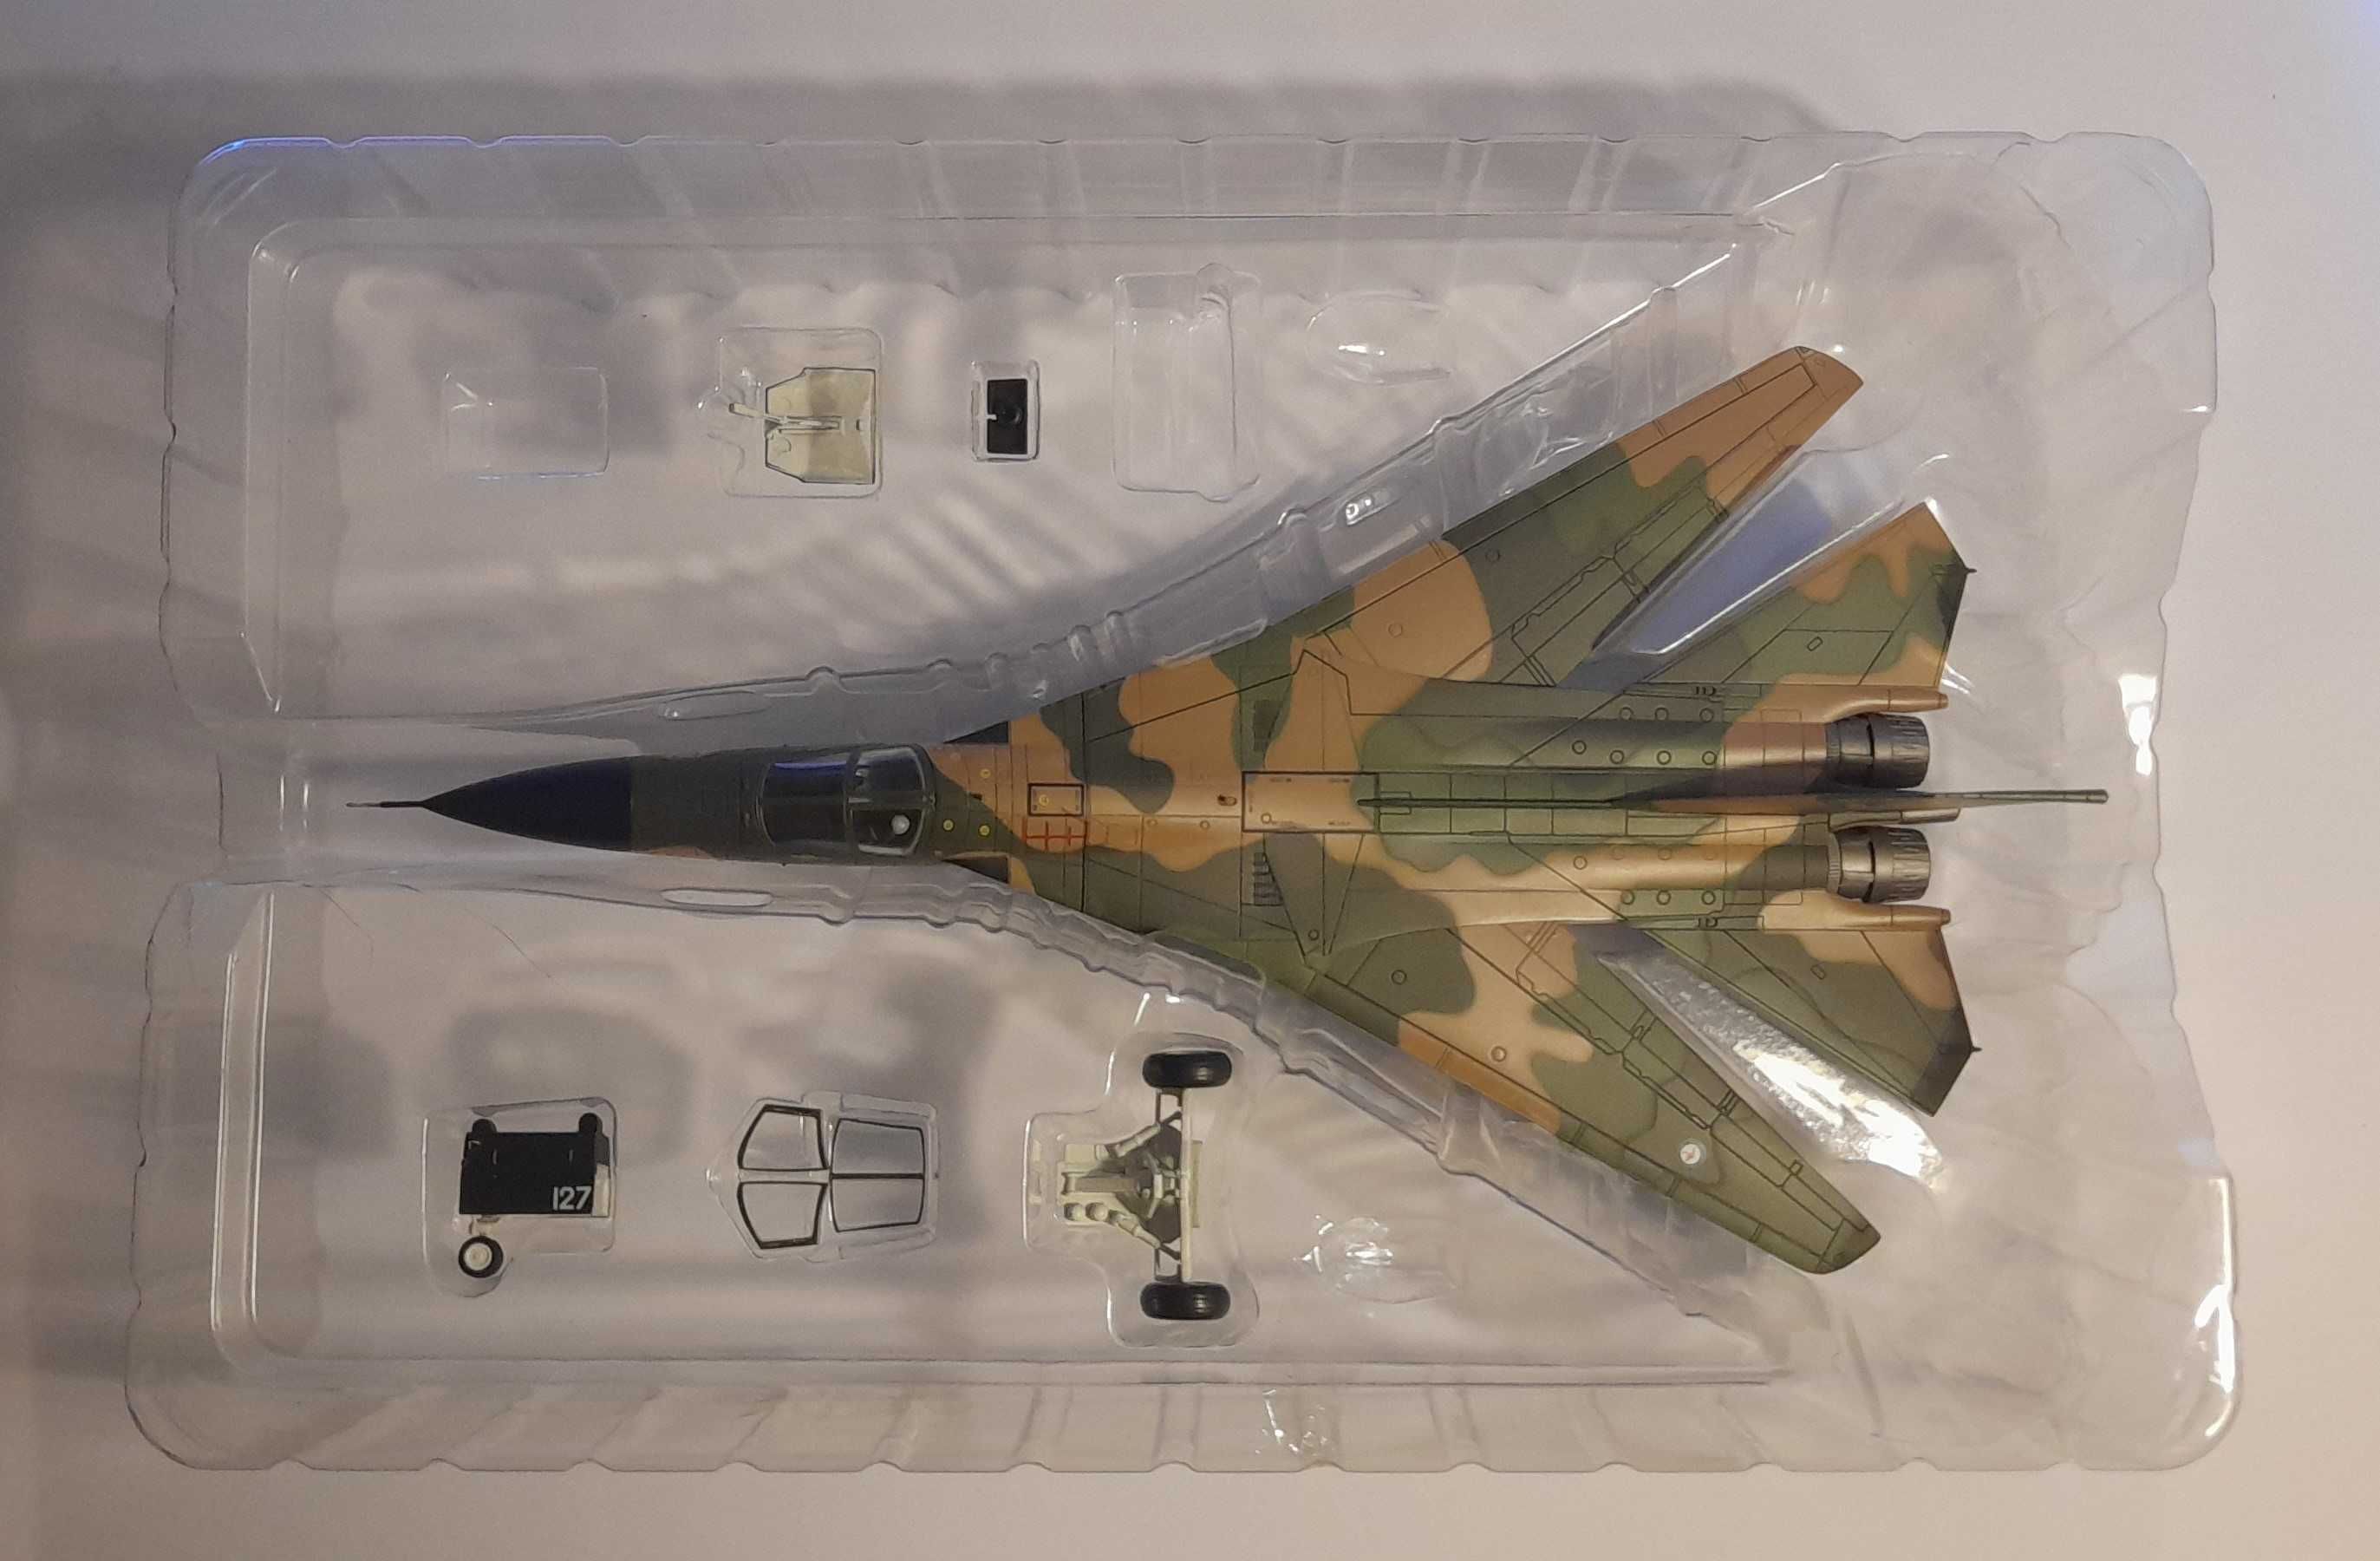 Miniatura Diecast 1:72 Hobby Master - RF-111C Aardvark